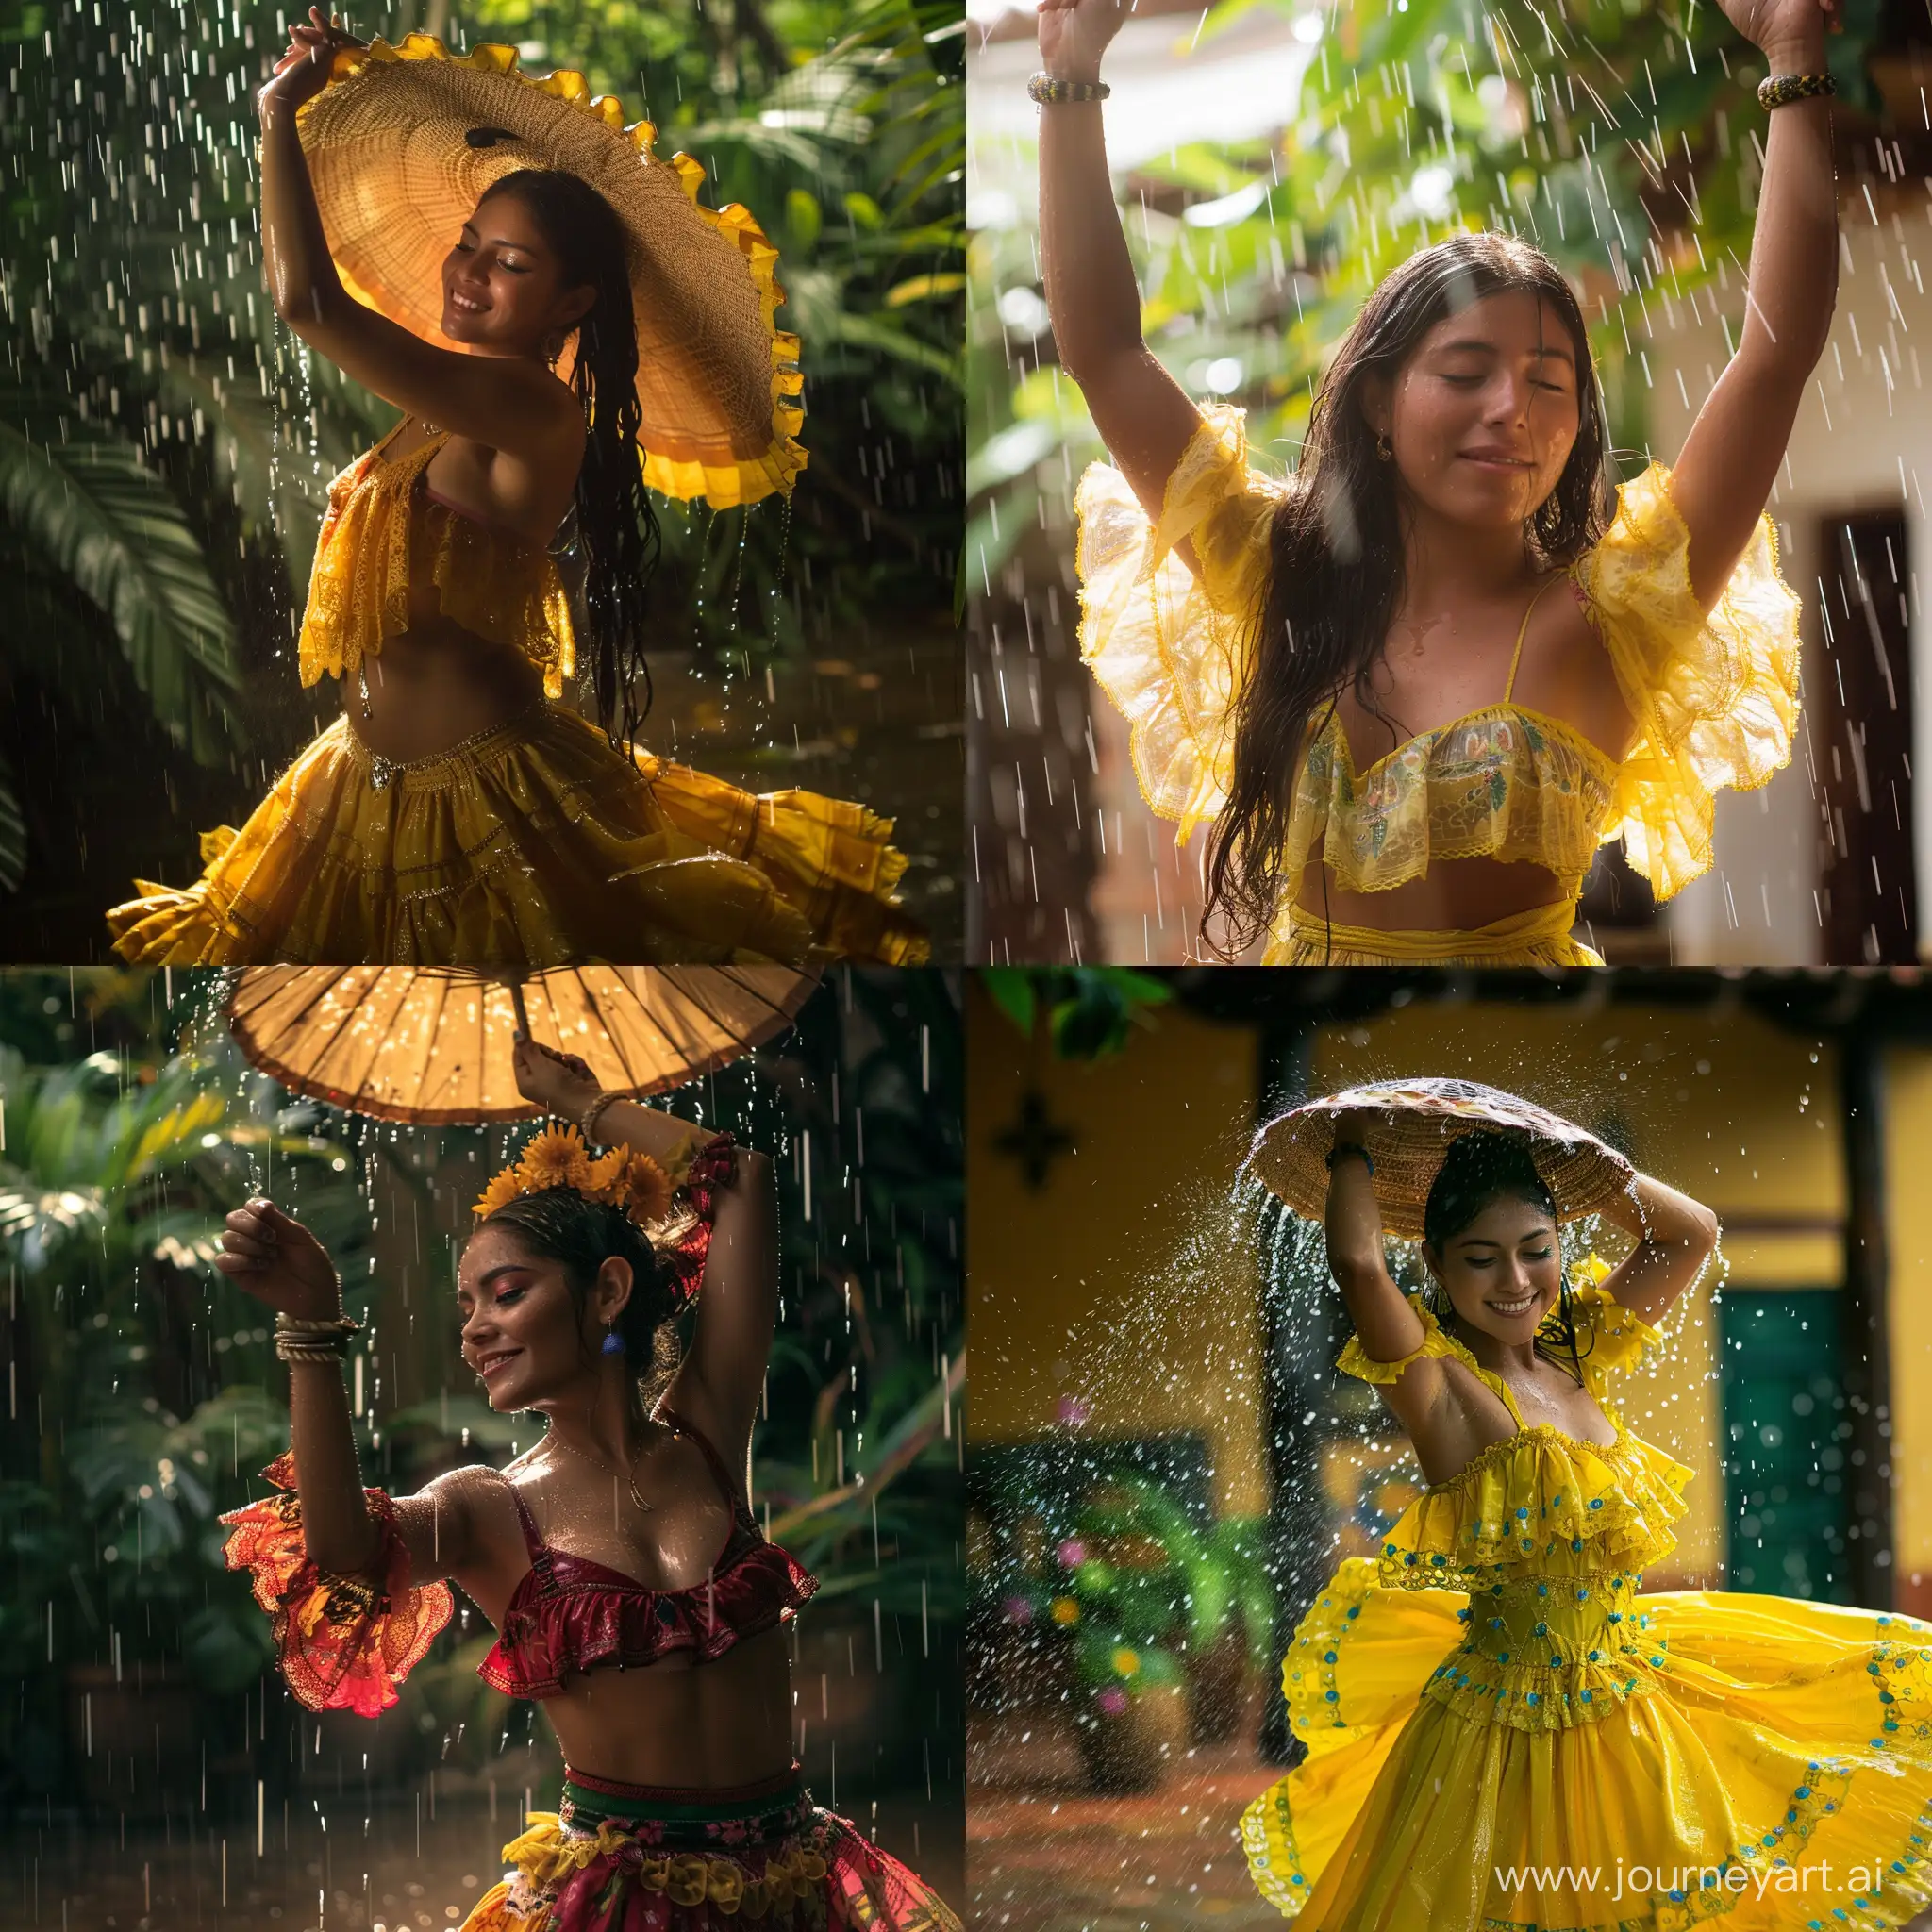 Joyful-Colombian-Woman-Dancing-in-the-Rain